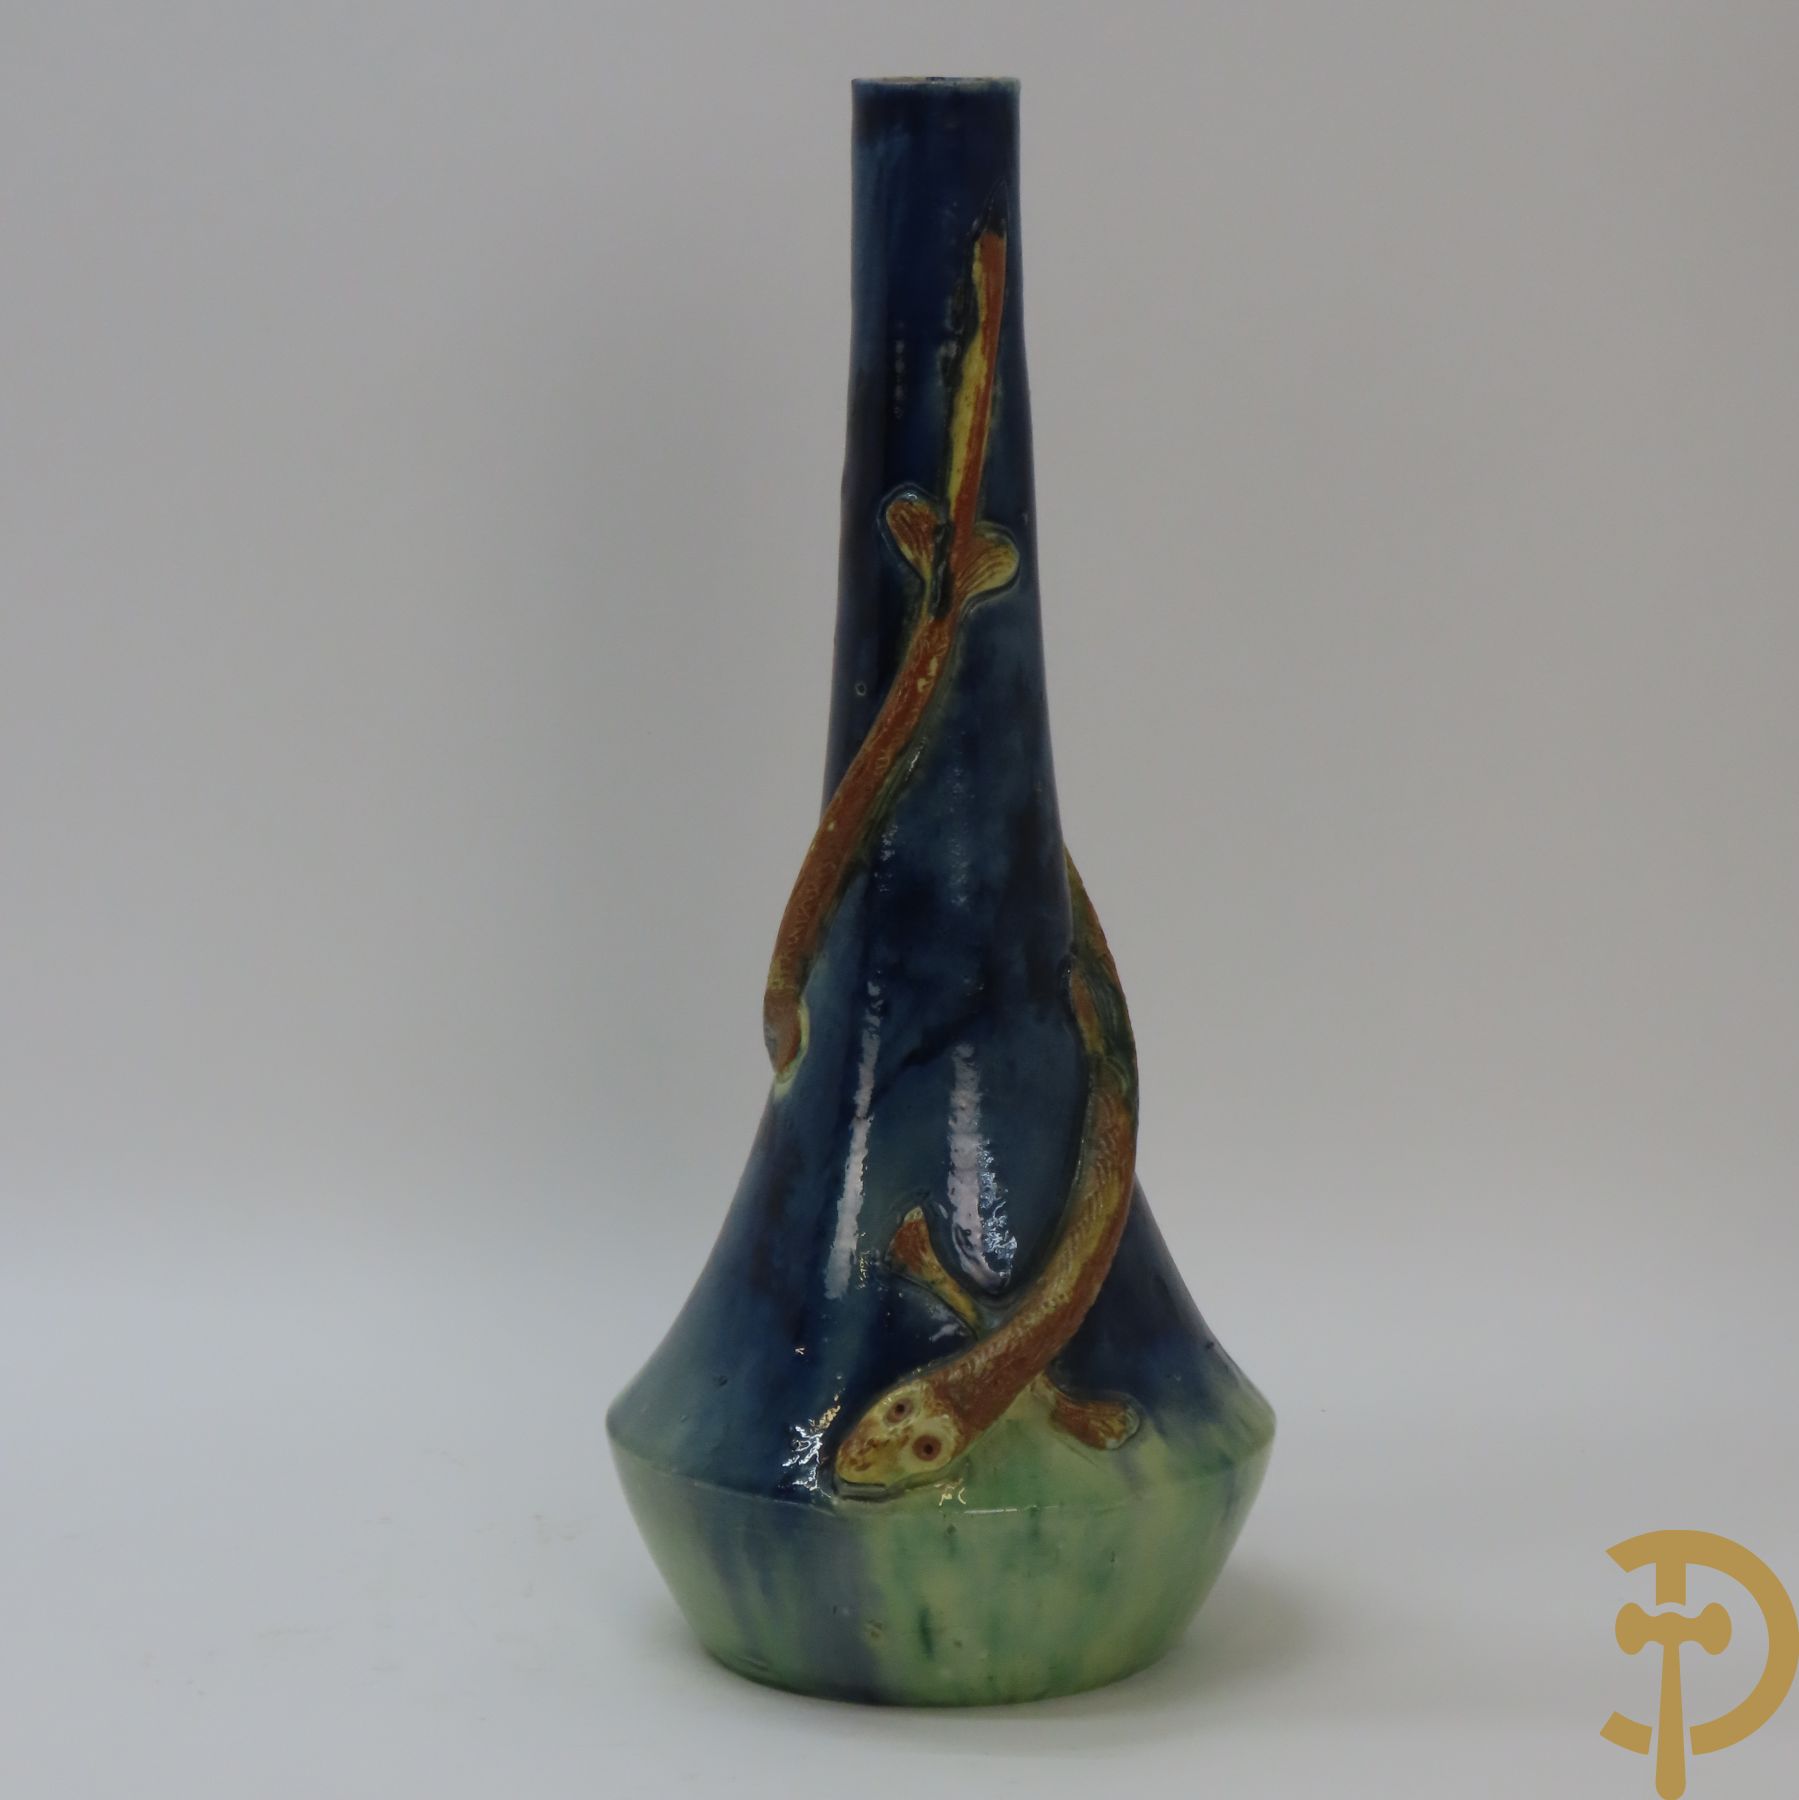 Vlaams aardewerken flesvormige vaas met 2 vissen, onderaan gemerkt Den Uil